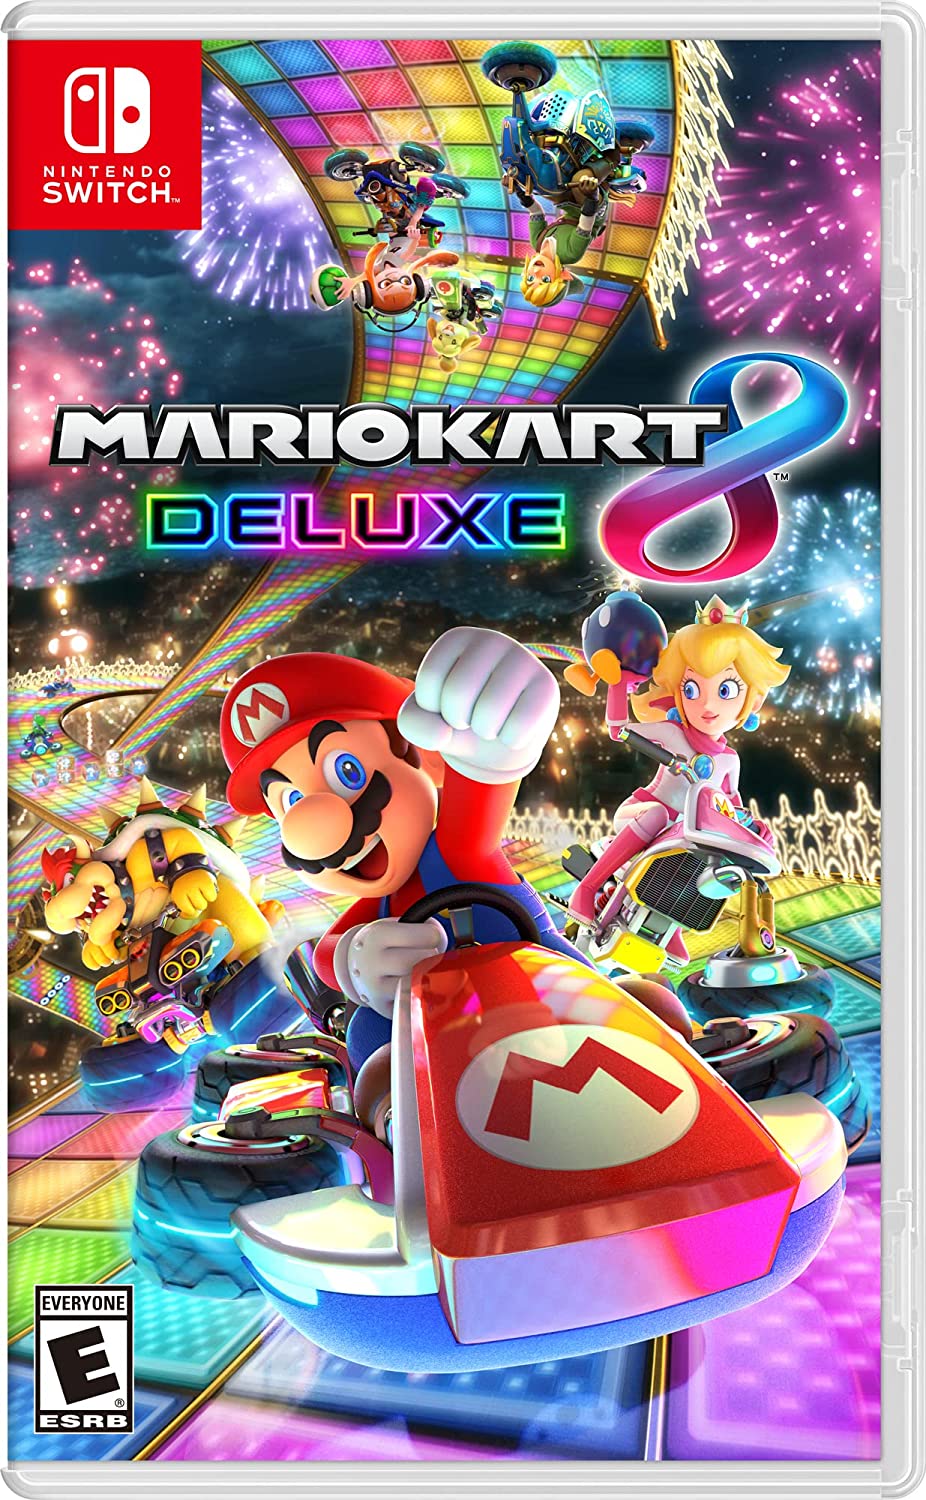 Mario Kart 8 Deluxe game cover artwork.